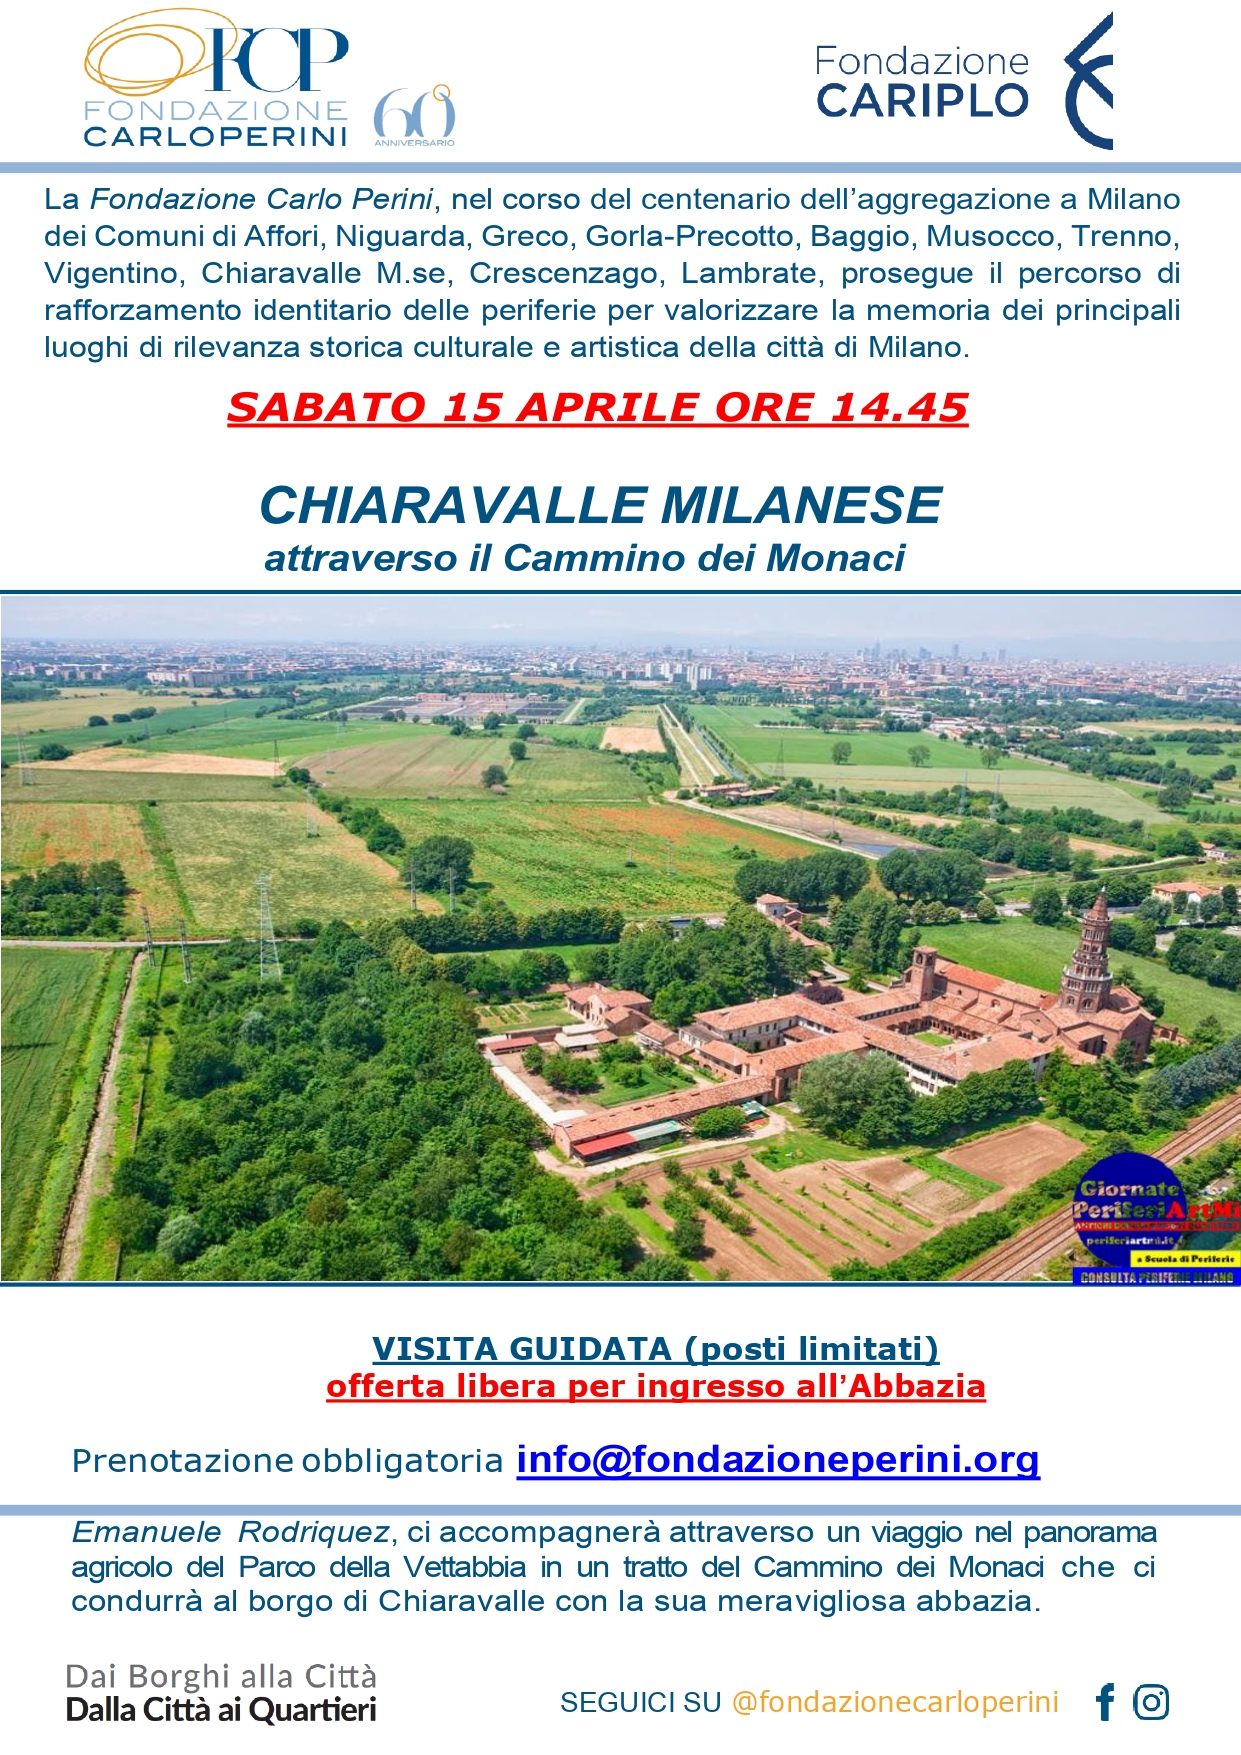 Guided tour of Chiaravalle Milanese - Perini Foundation